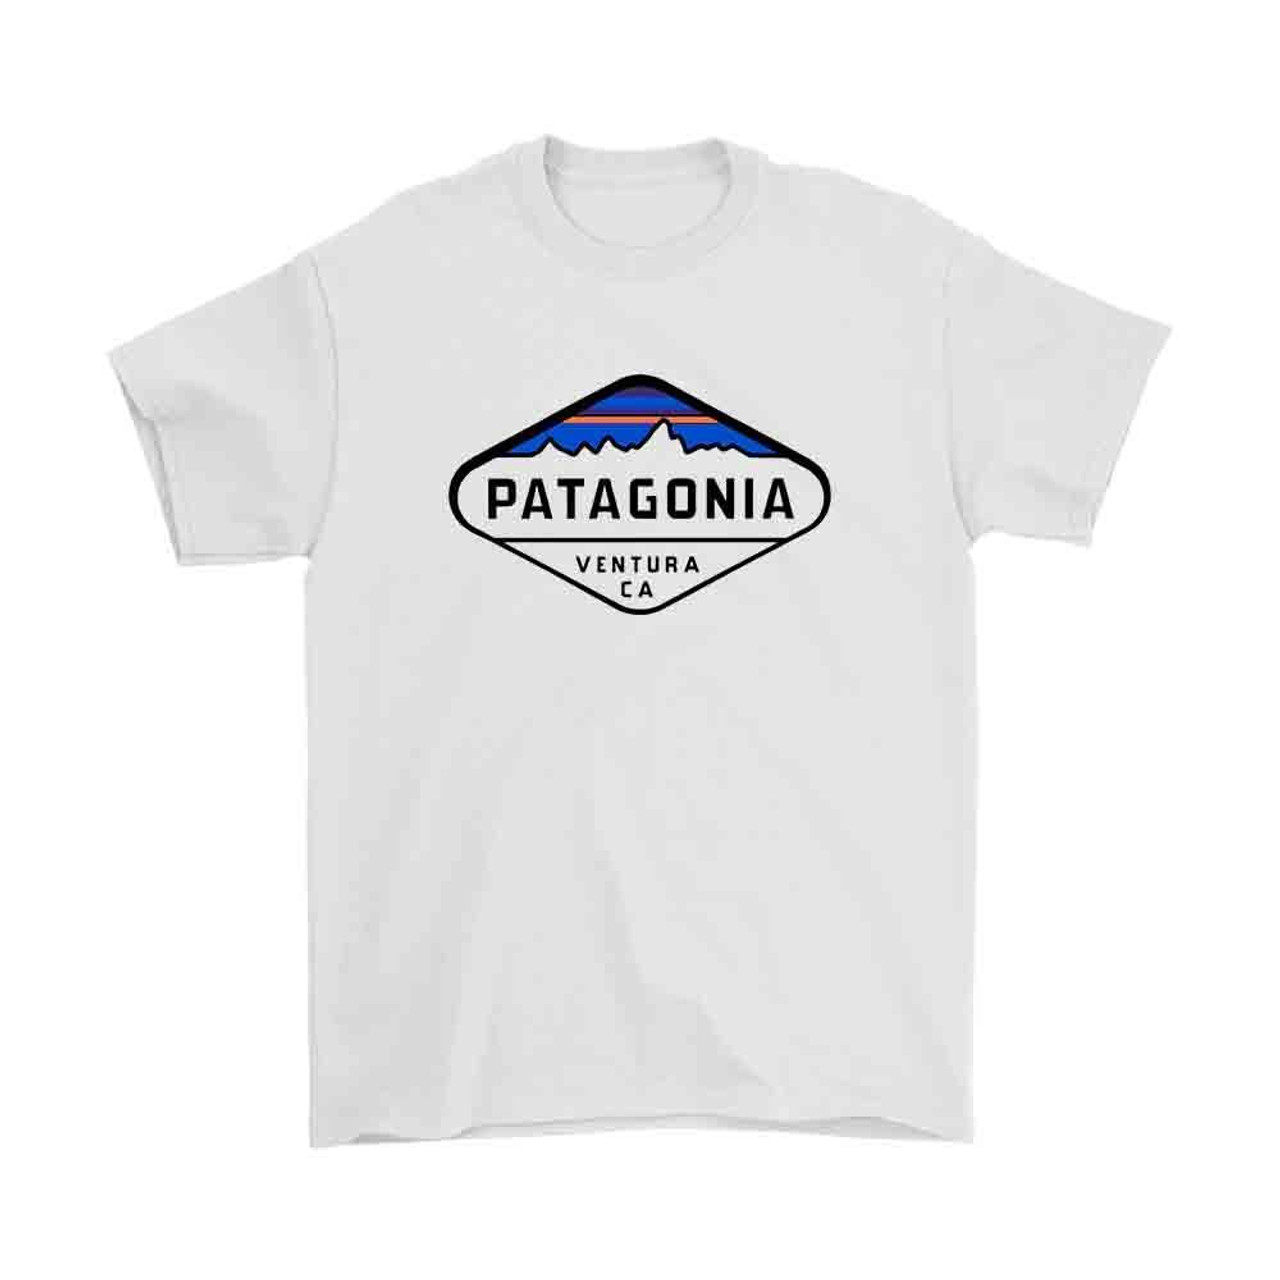 Patagonia Ventura Ca Logo Man's T-Shirt Tee